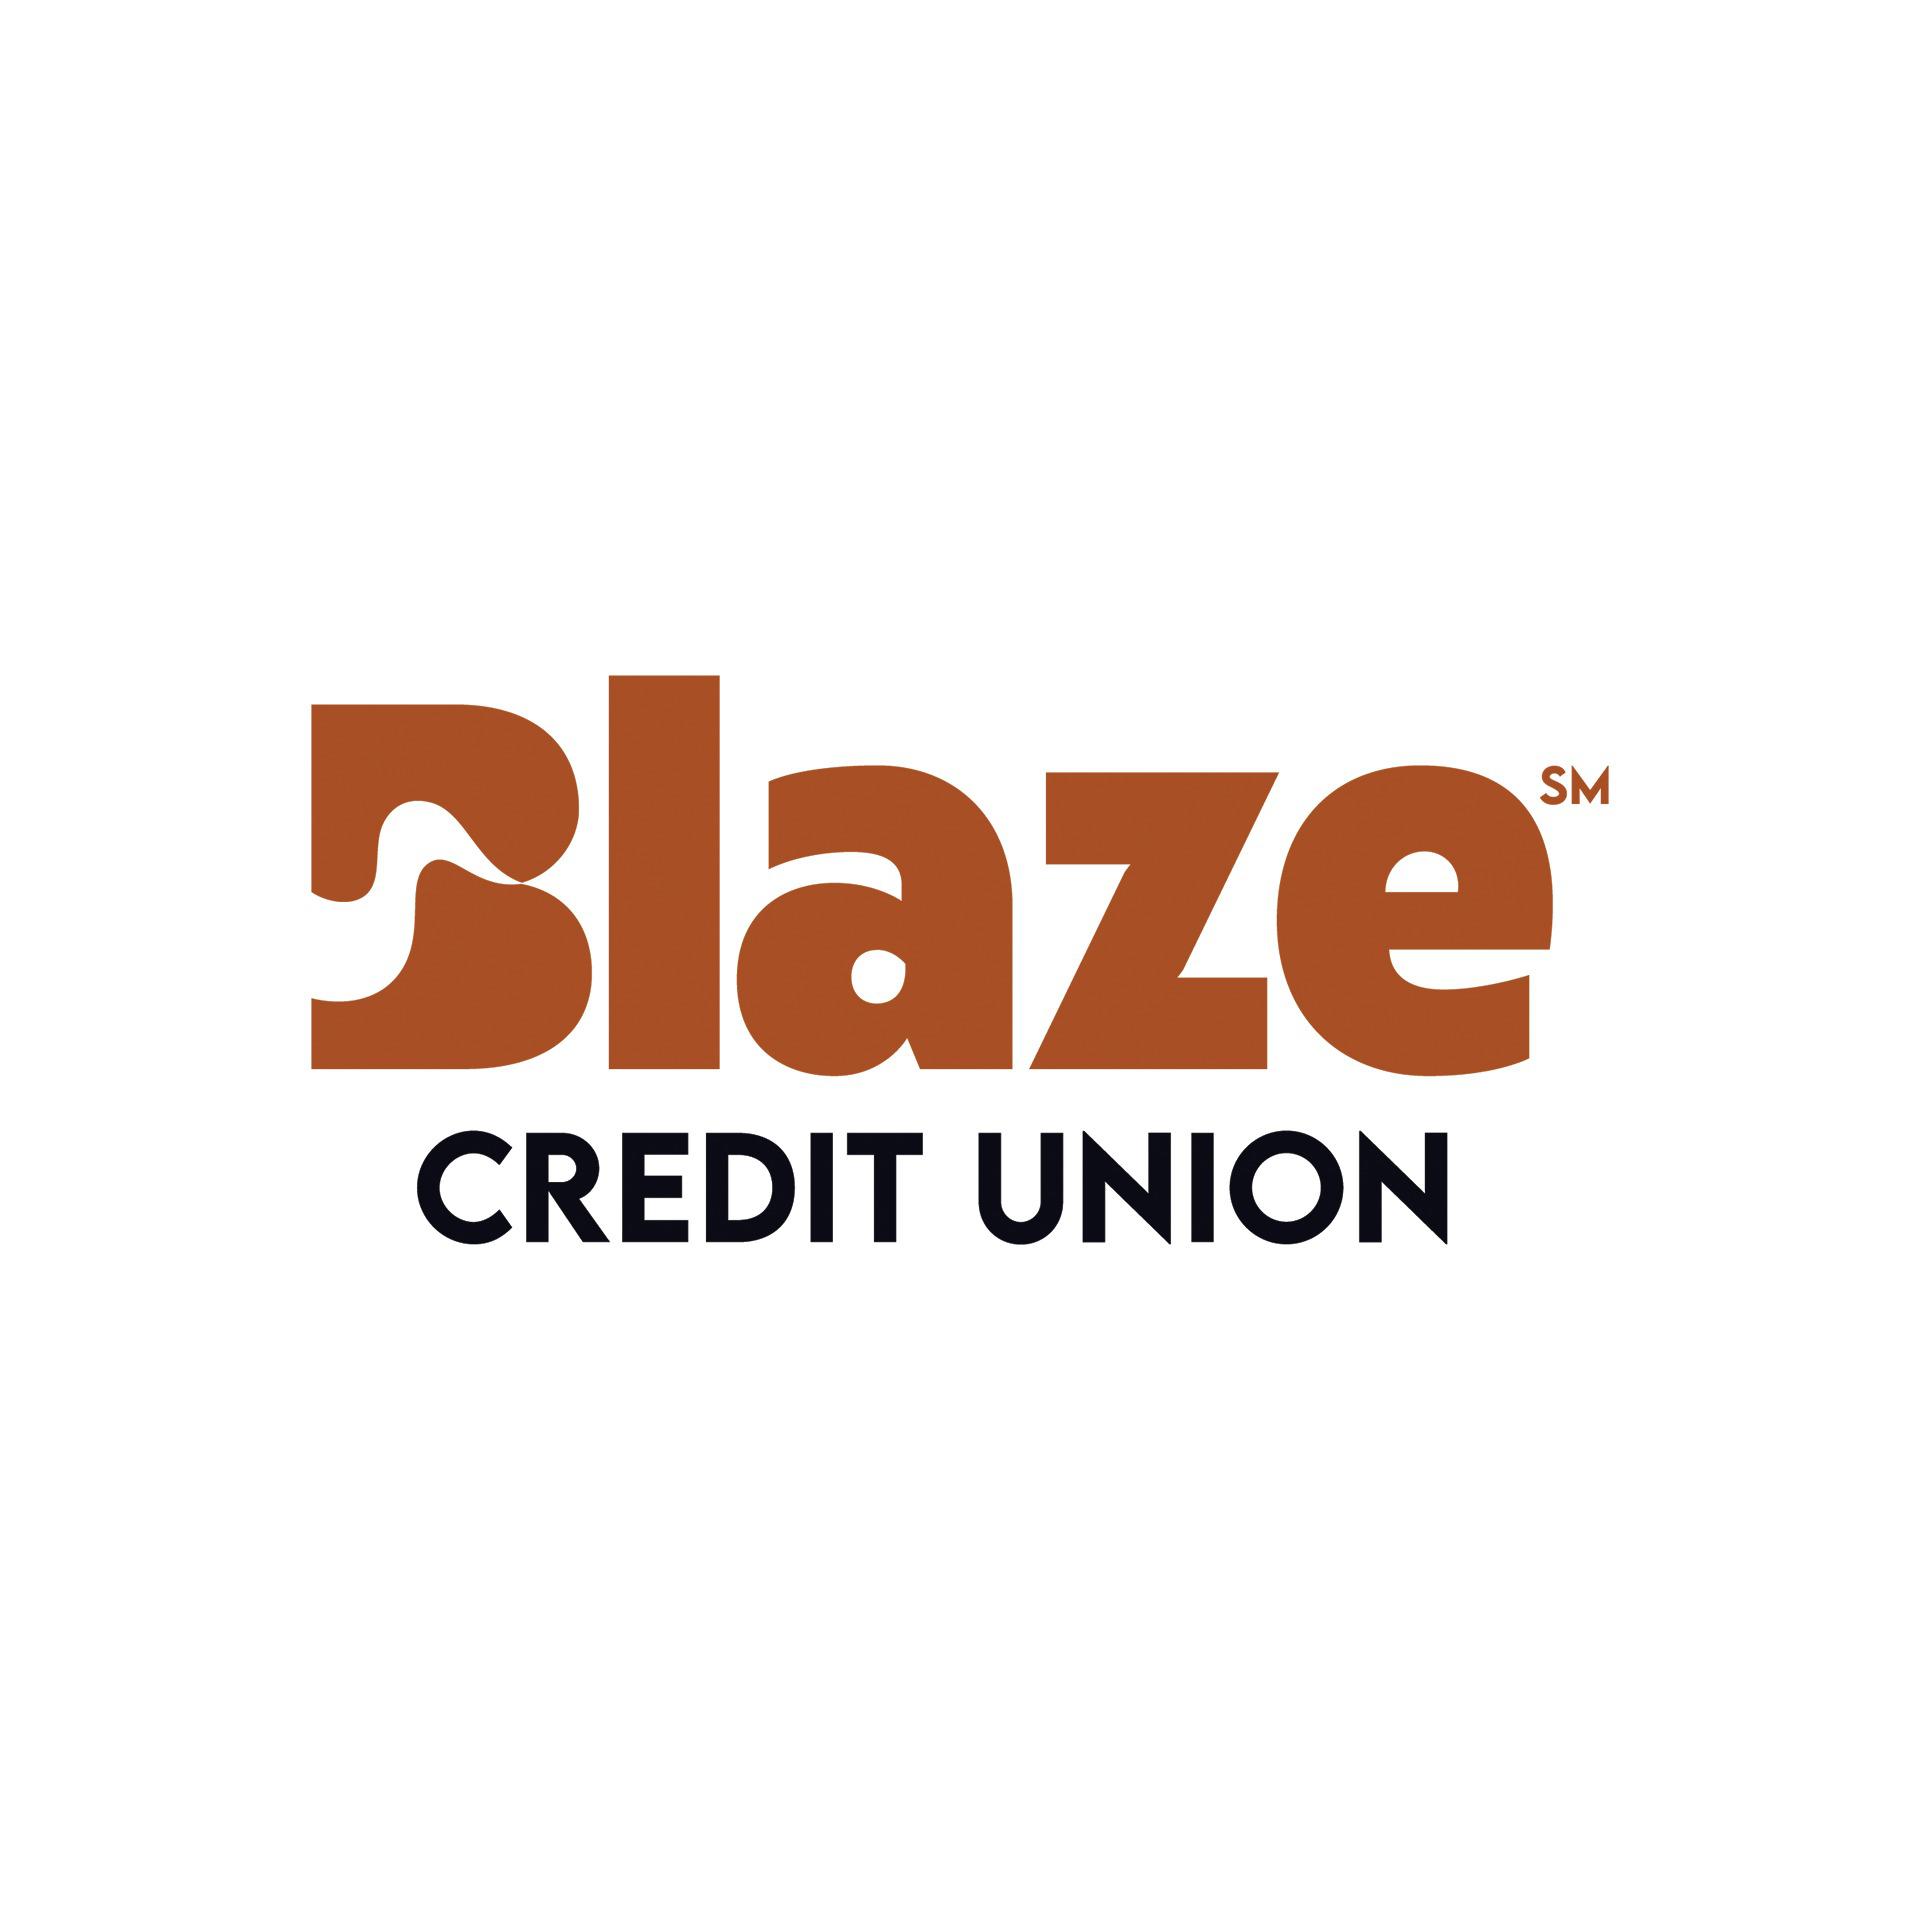 Blaze Credit Union - Waseca - Waseca, MN 56093 - (651)215-3500 | ShowMeLocal.com